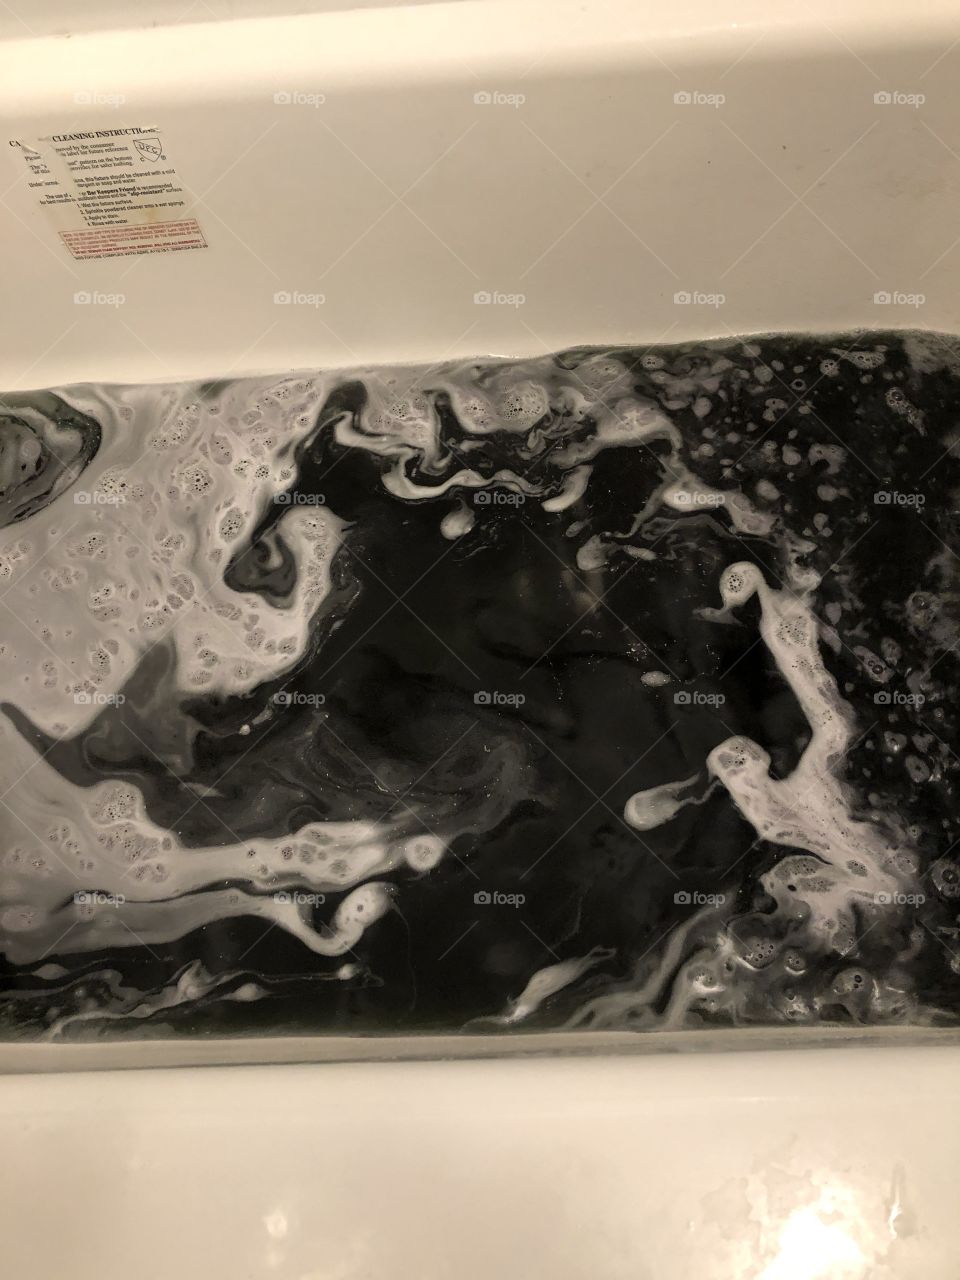 A glittery bath bomb in the bath, with foam and warm water a pristine white bathtub. 